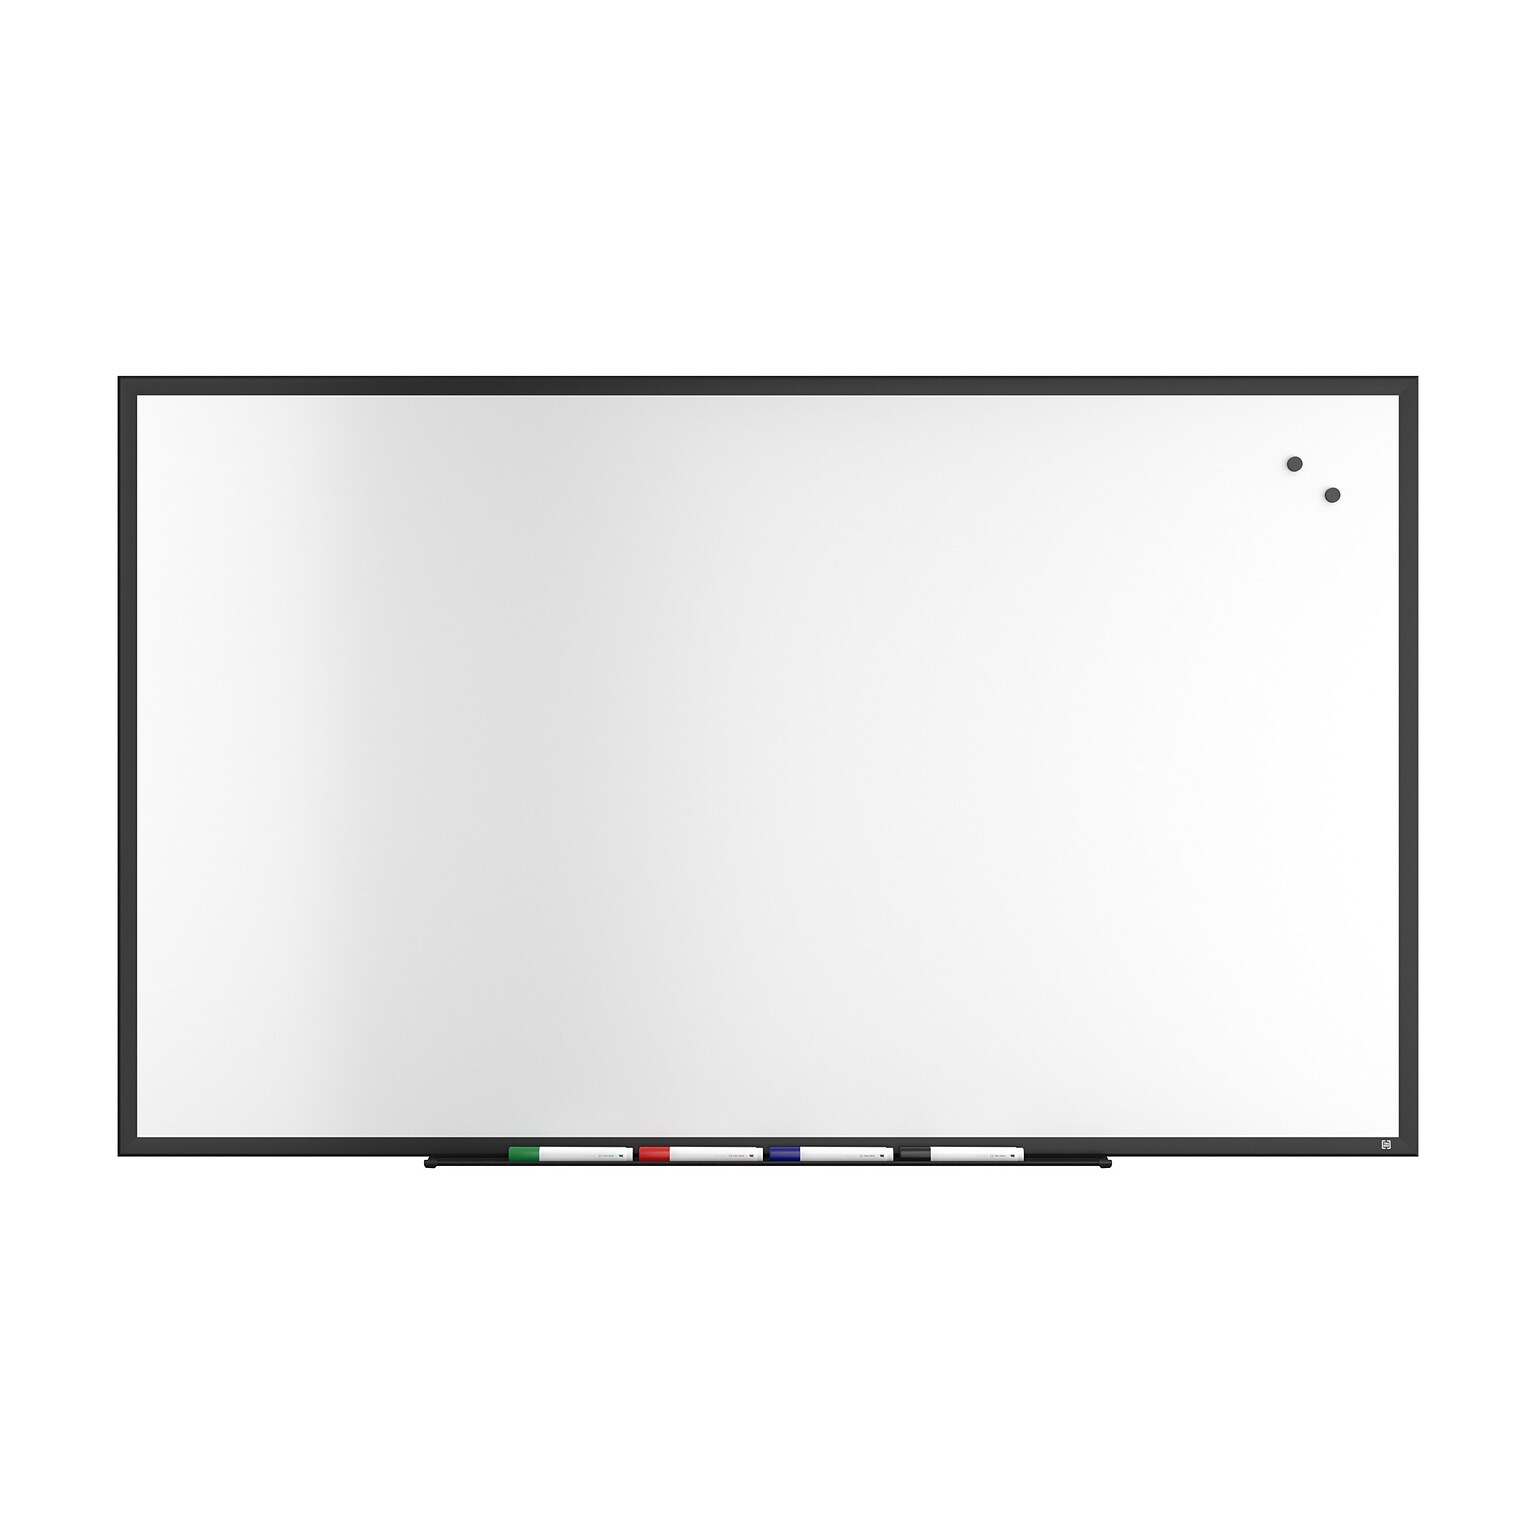 TRU RED™ Magnetic Steel Dry Erase Board, Black Frame, 5 x 3 (TR61182)